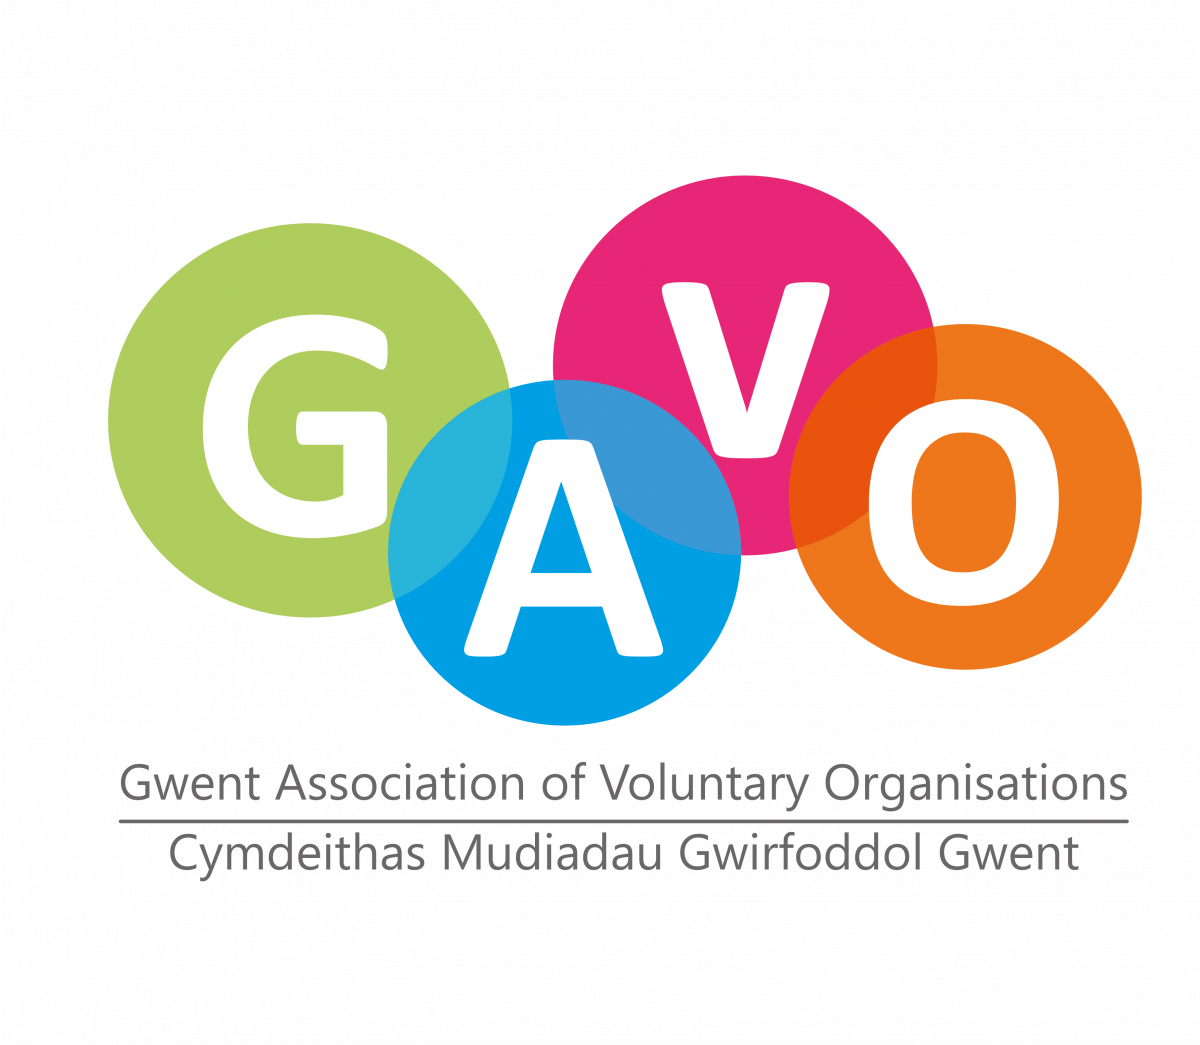 Gavo Logo